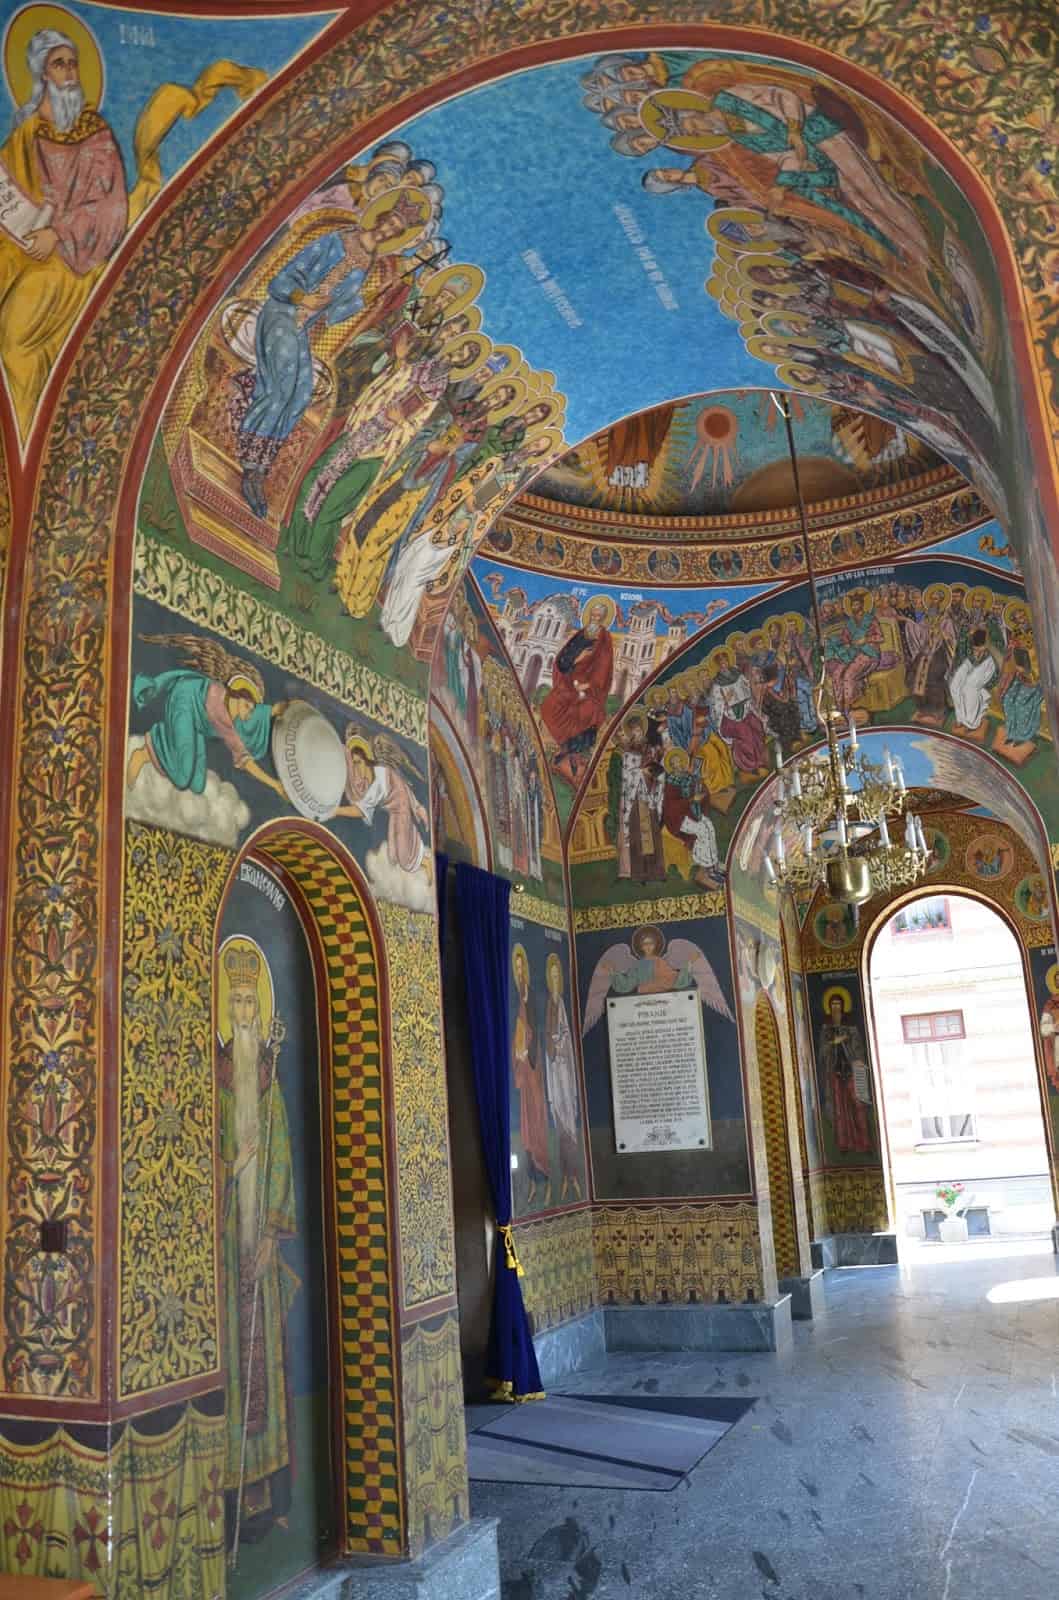 Radu Vodă Monastery in Bucharest, Romania